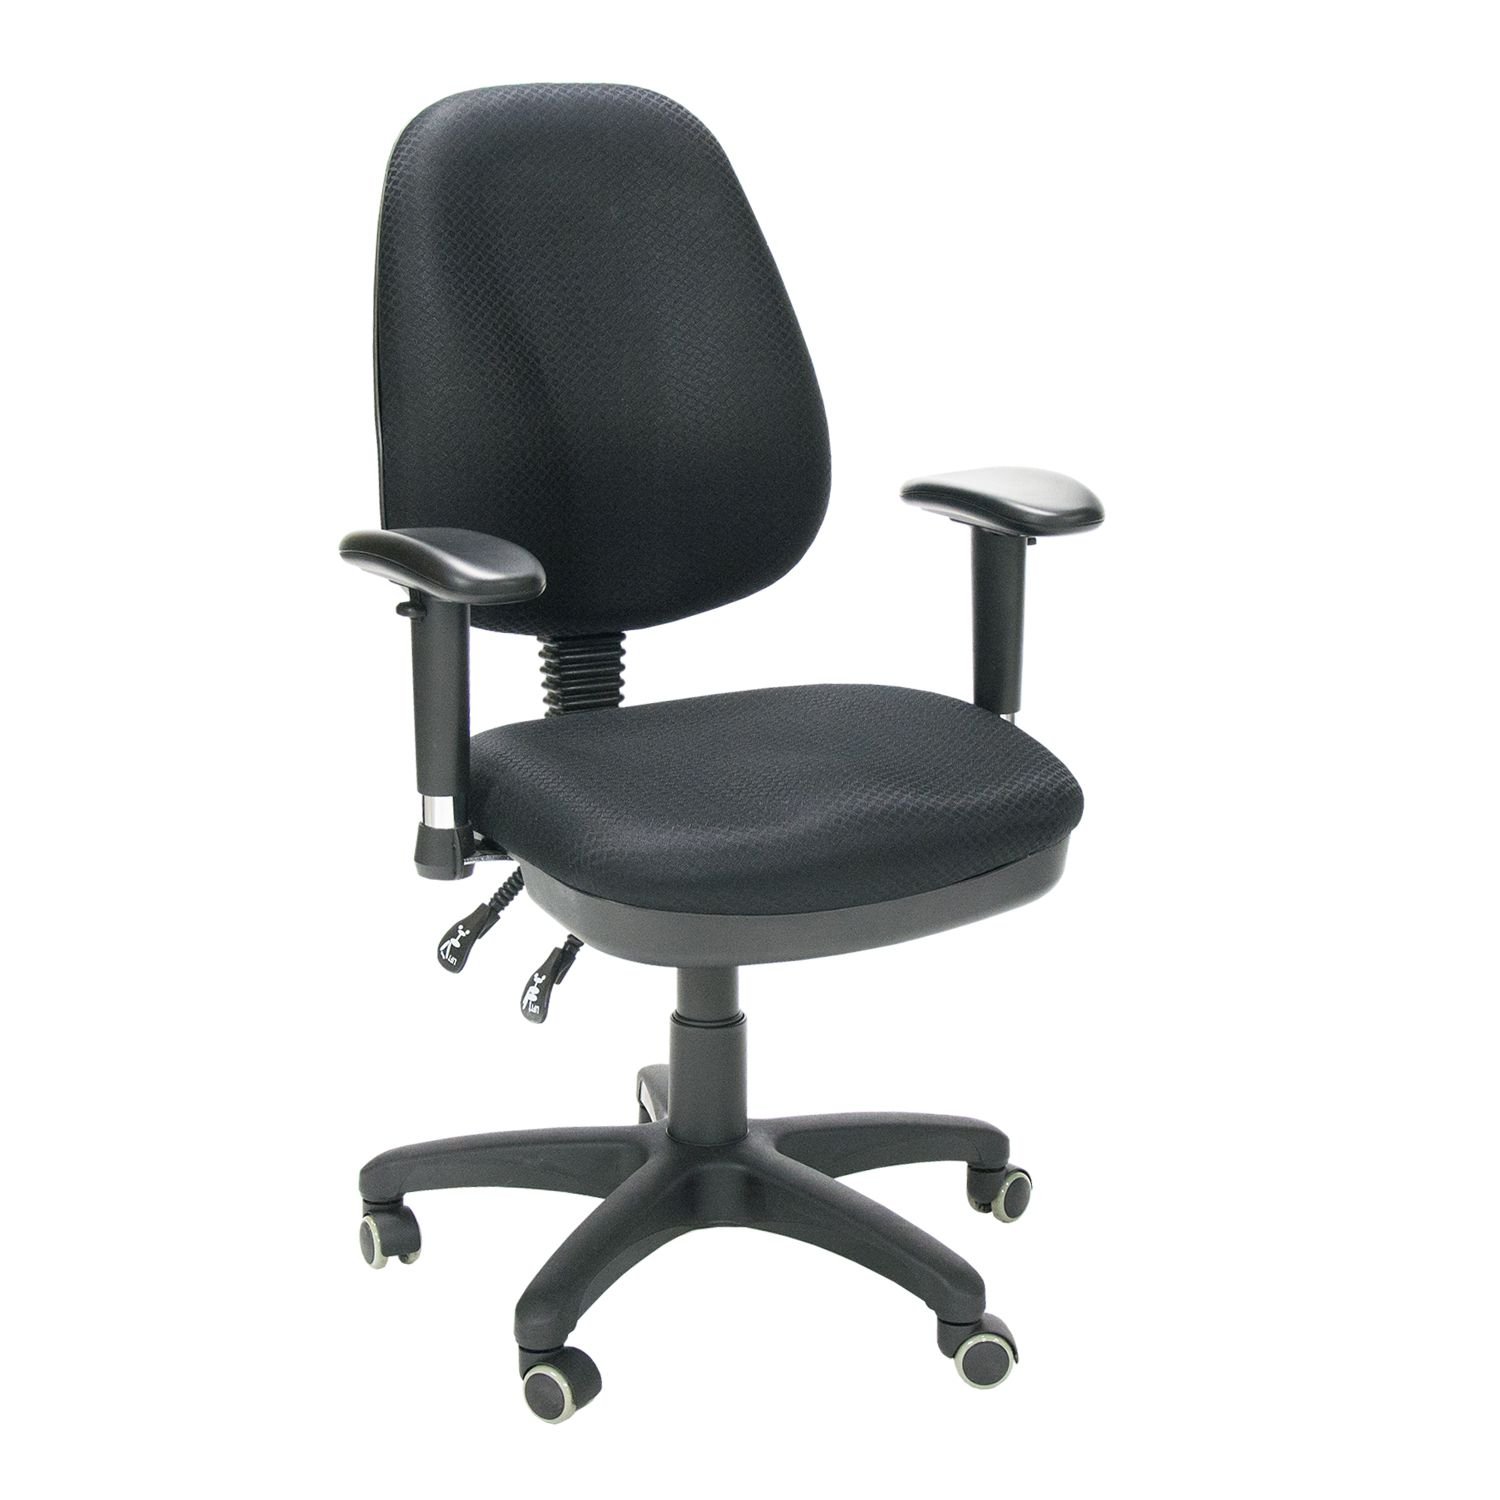 Biuro kėdė 421FGA-LUX, 65x47x96-106 cm, juoda - 1